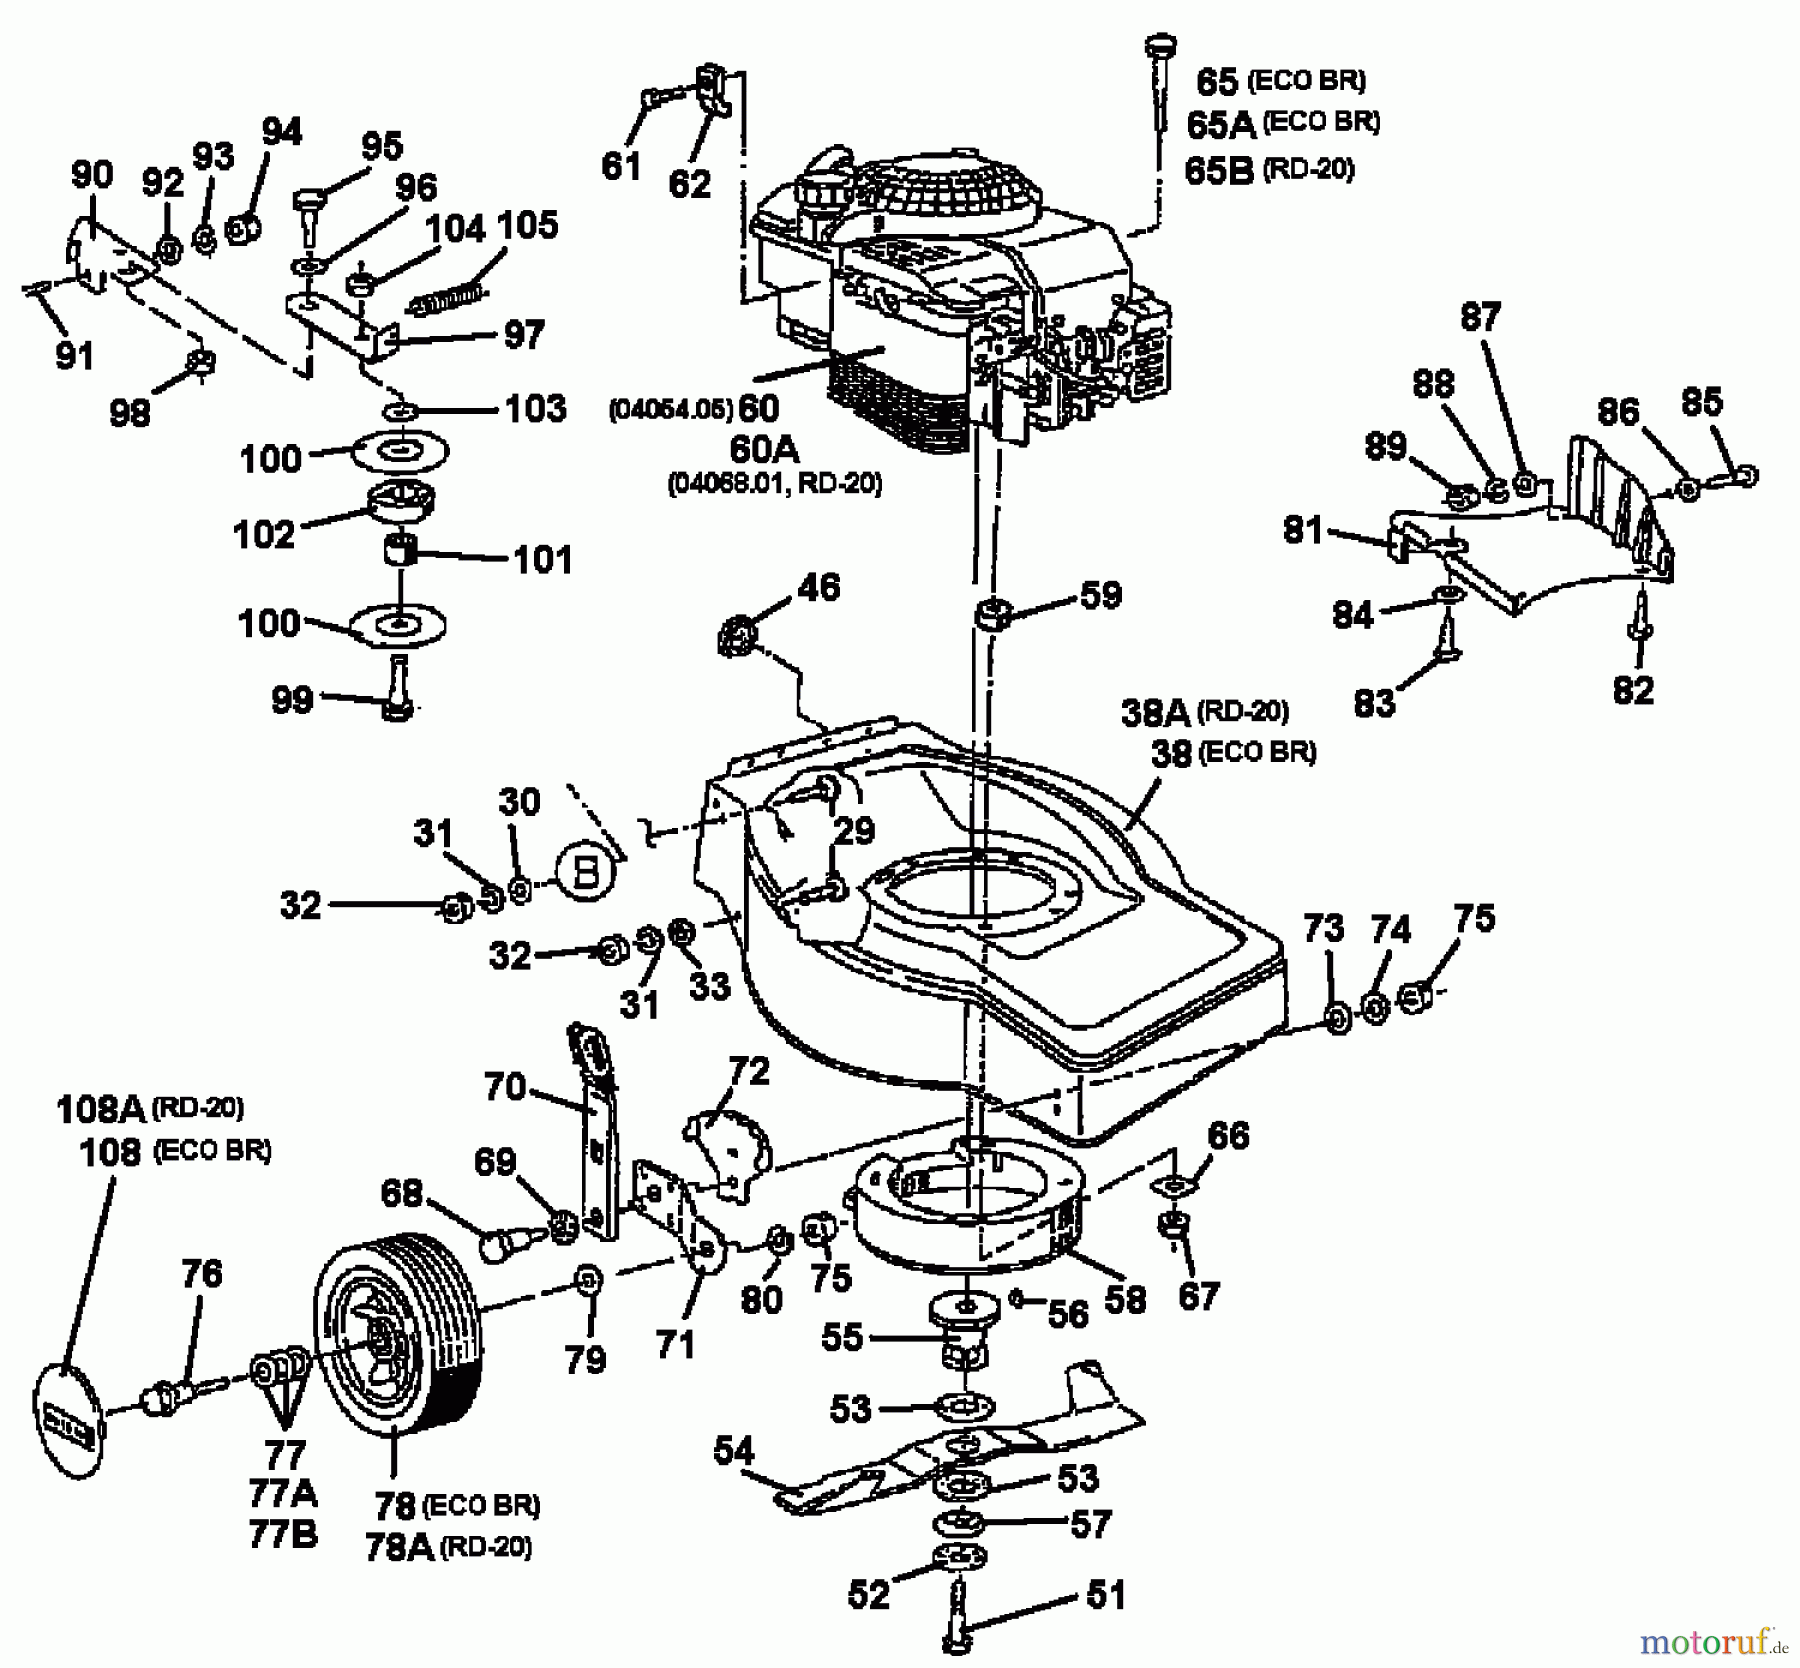  Gutbrod Motormäher mit Antrieb ECO BR 04068.01  (1997) Grundgerät